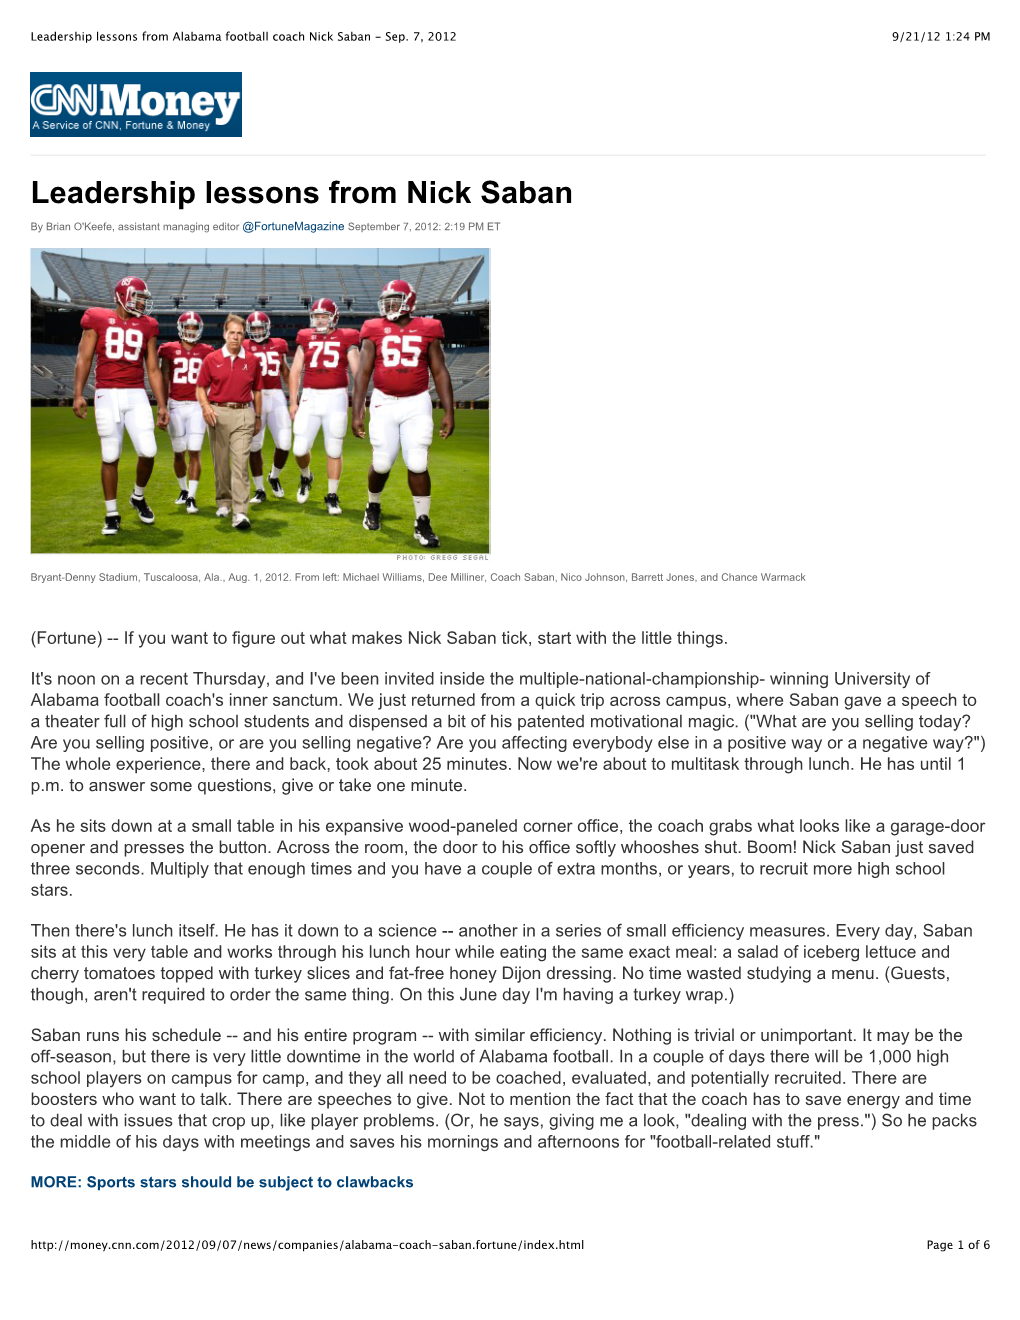 Leadership Lessons from Alabama Football Coach Nick Saban - Sep